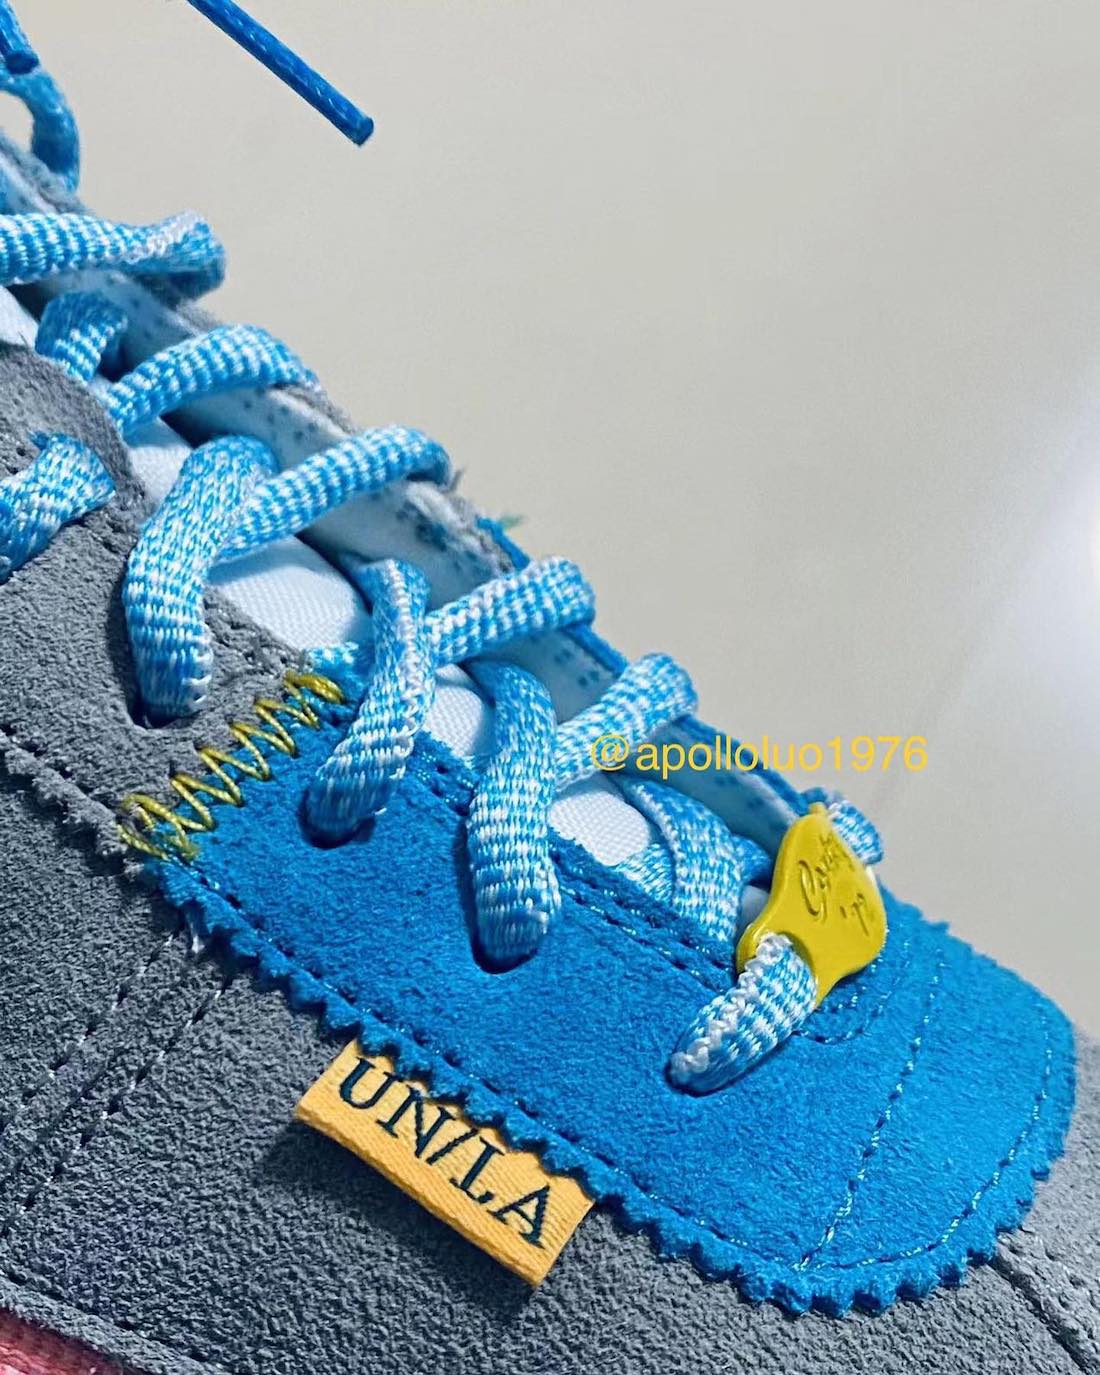 Union Nike Cortez Grigio Blu Giallo